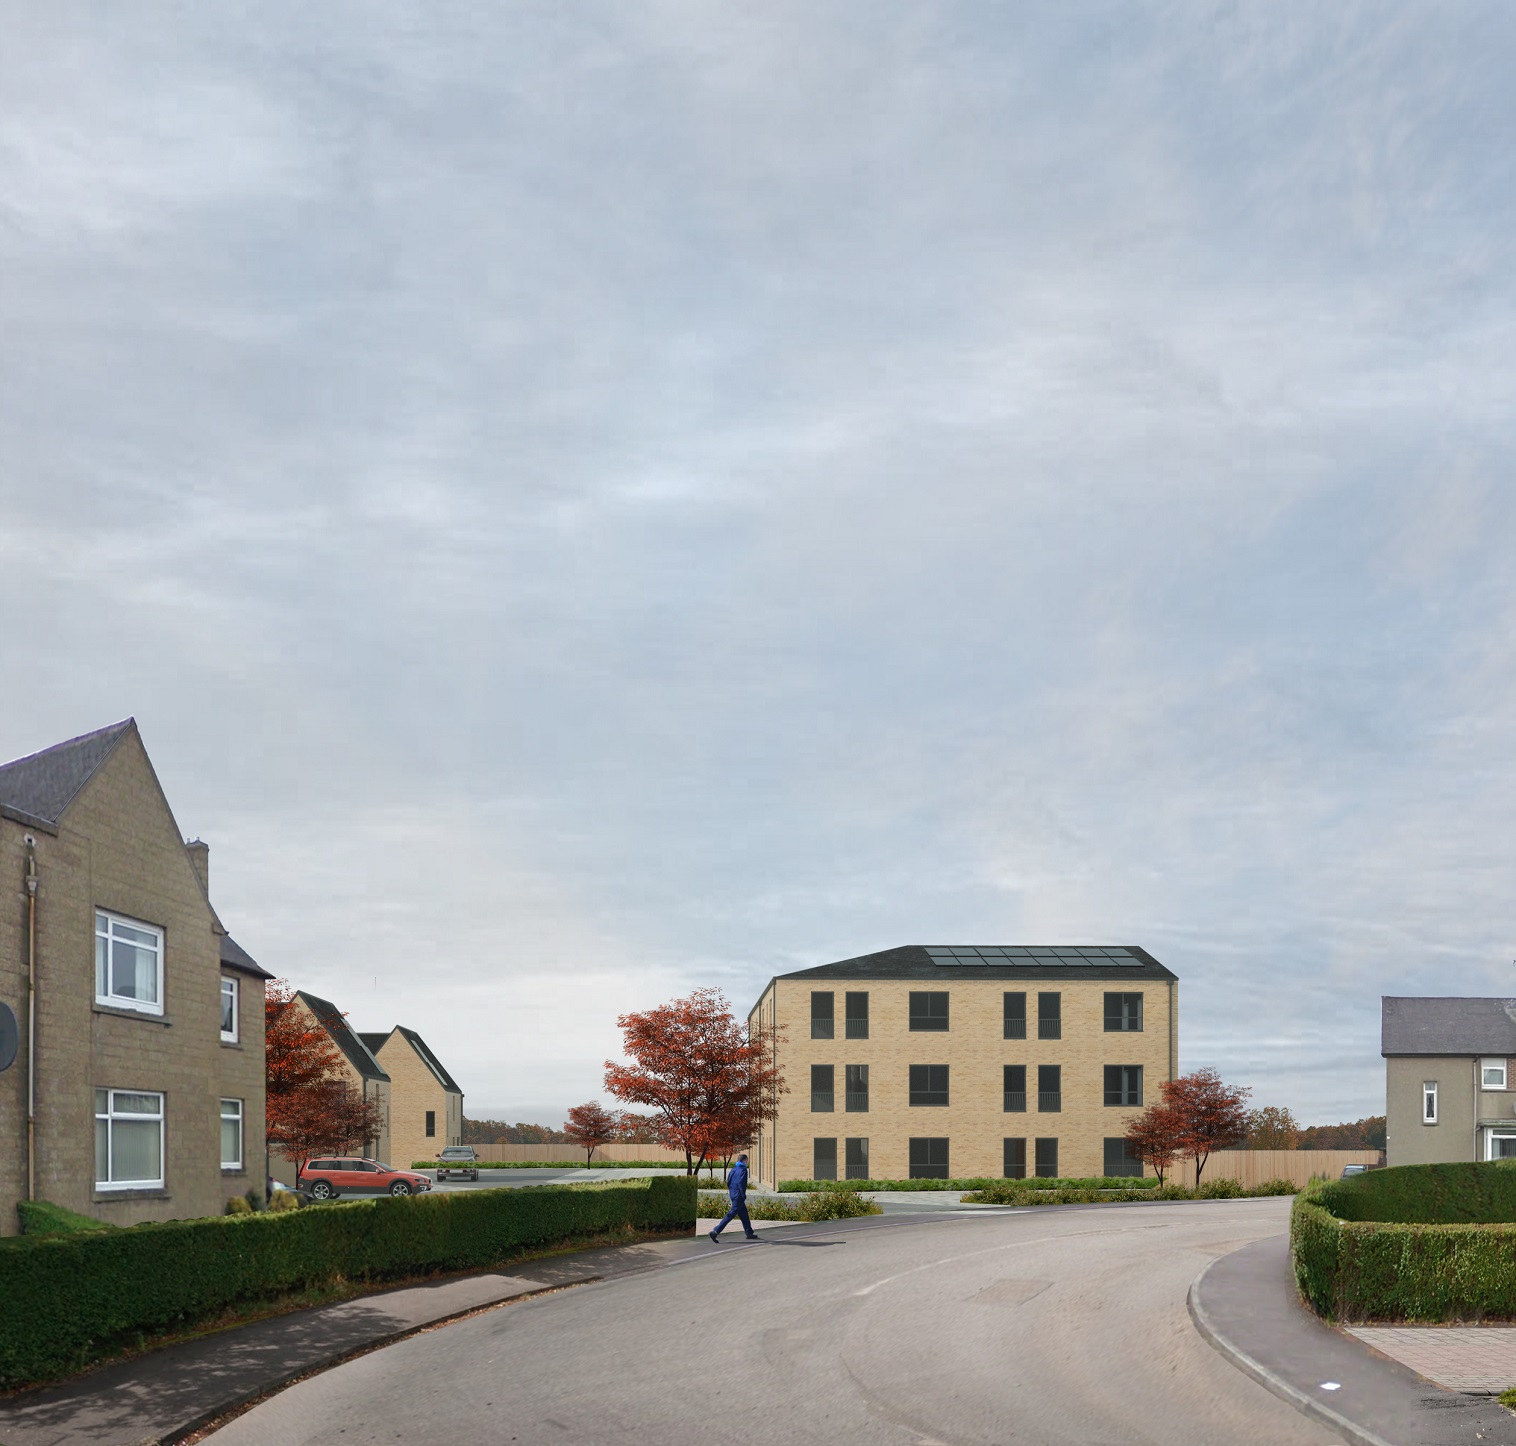 More than 100 new Loretto homes take shape across central Scotland